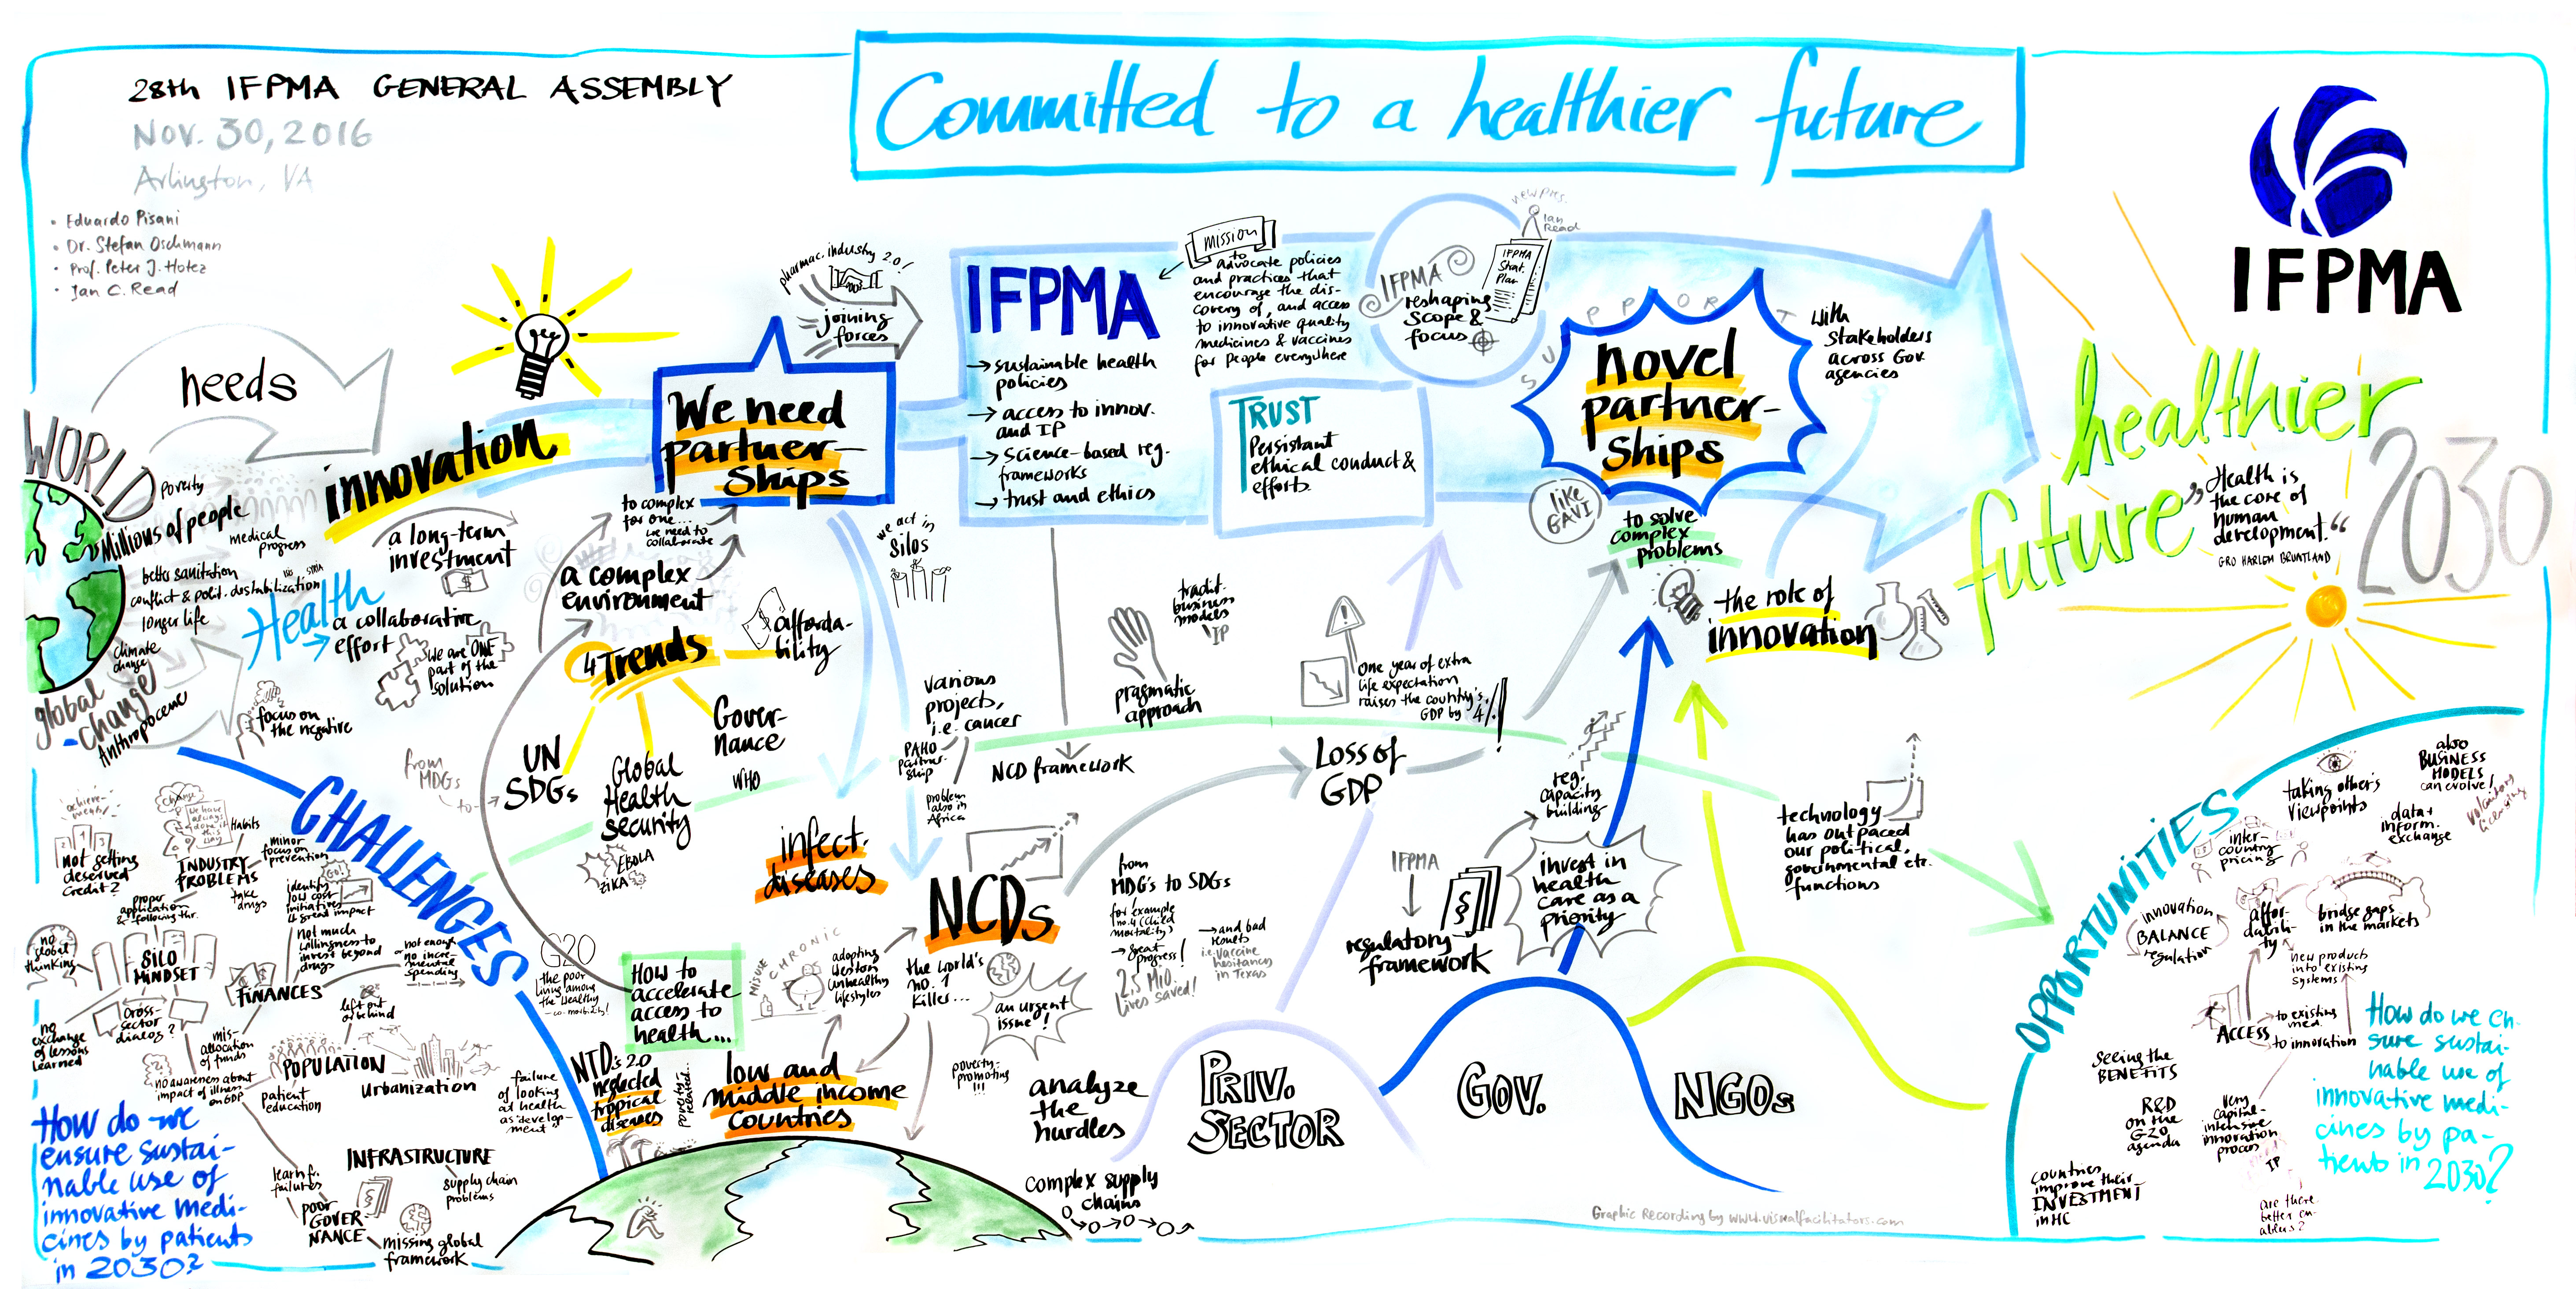 2016 IFPMA General Assembly Live Visualization